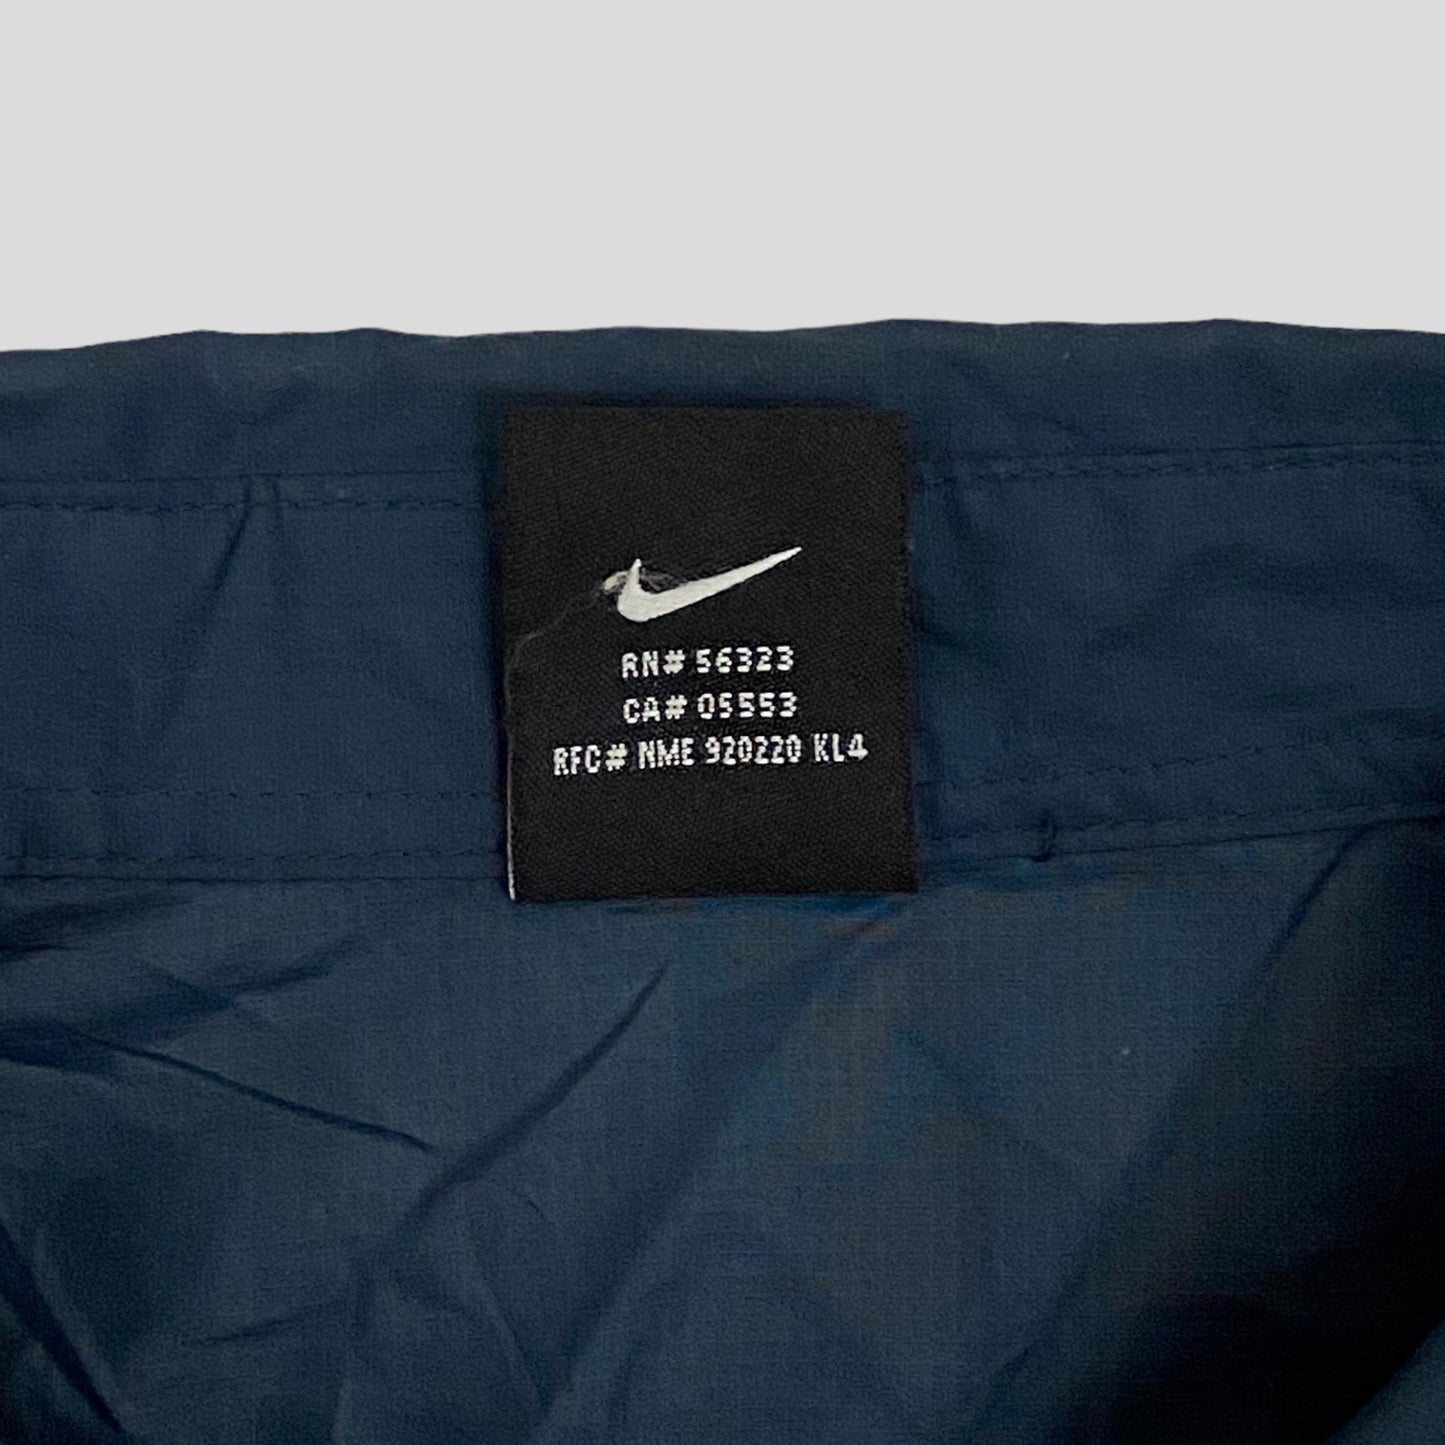 Nike ACG SS01 Technical Ripstop 2 in 1 Shirt - M